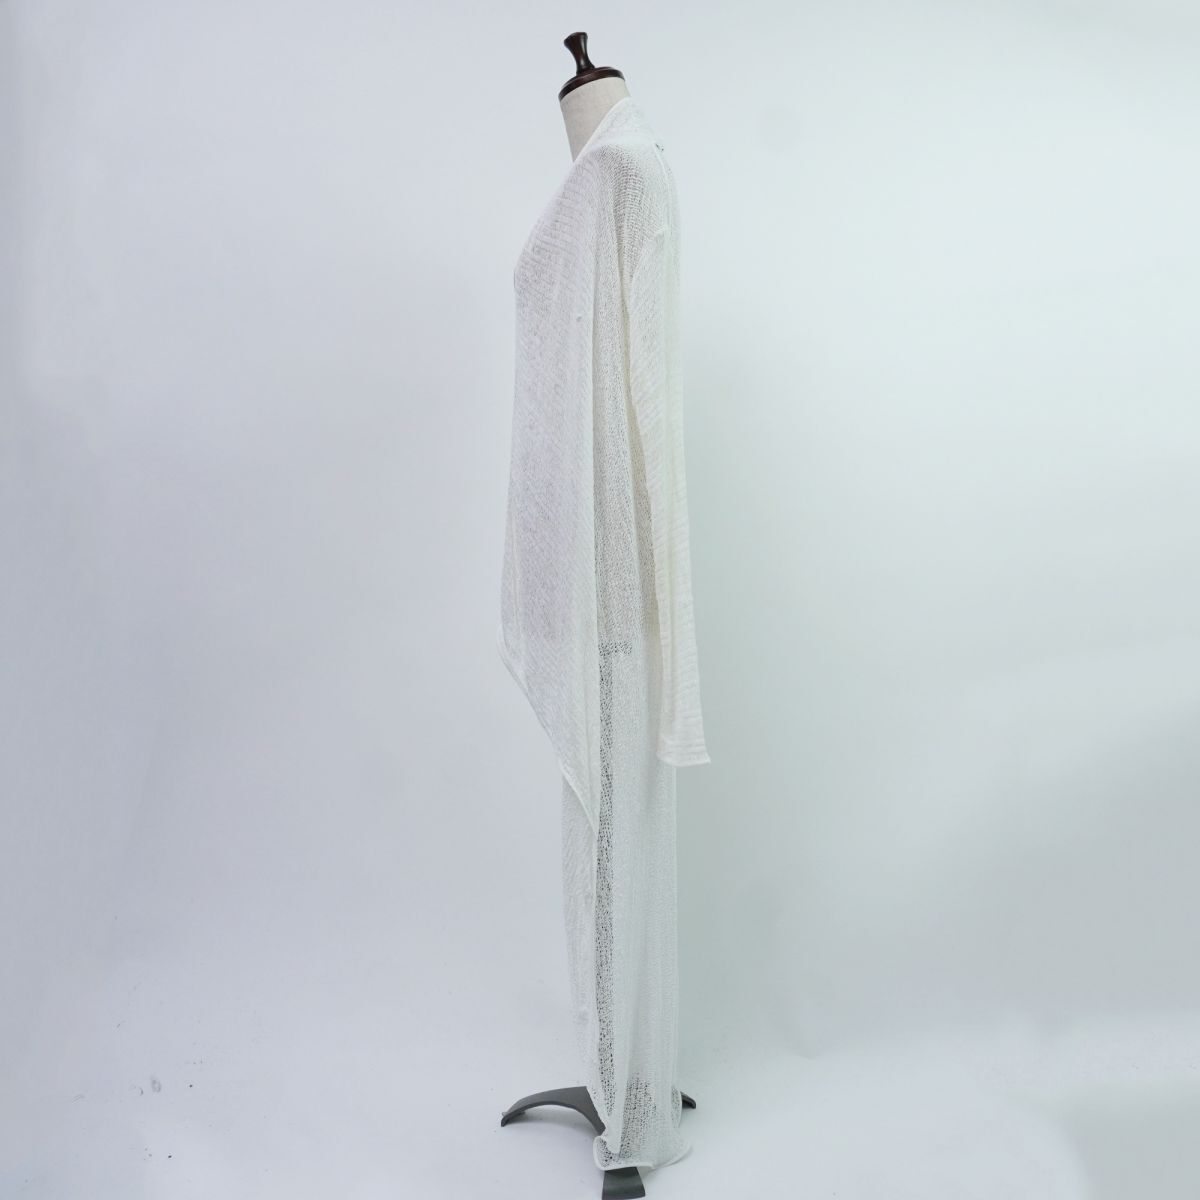  прекрасный товар DKNY Donna Karan New York ... плетеный si Aaron gtopa- кардиган tops женский белый белый размер S*OC1659